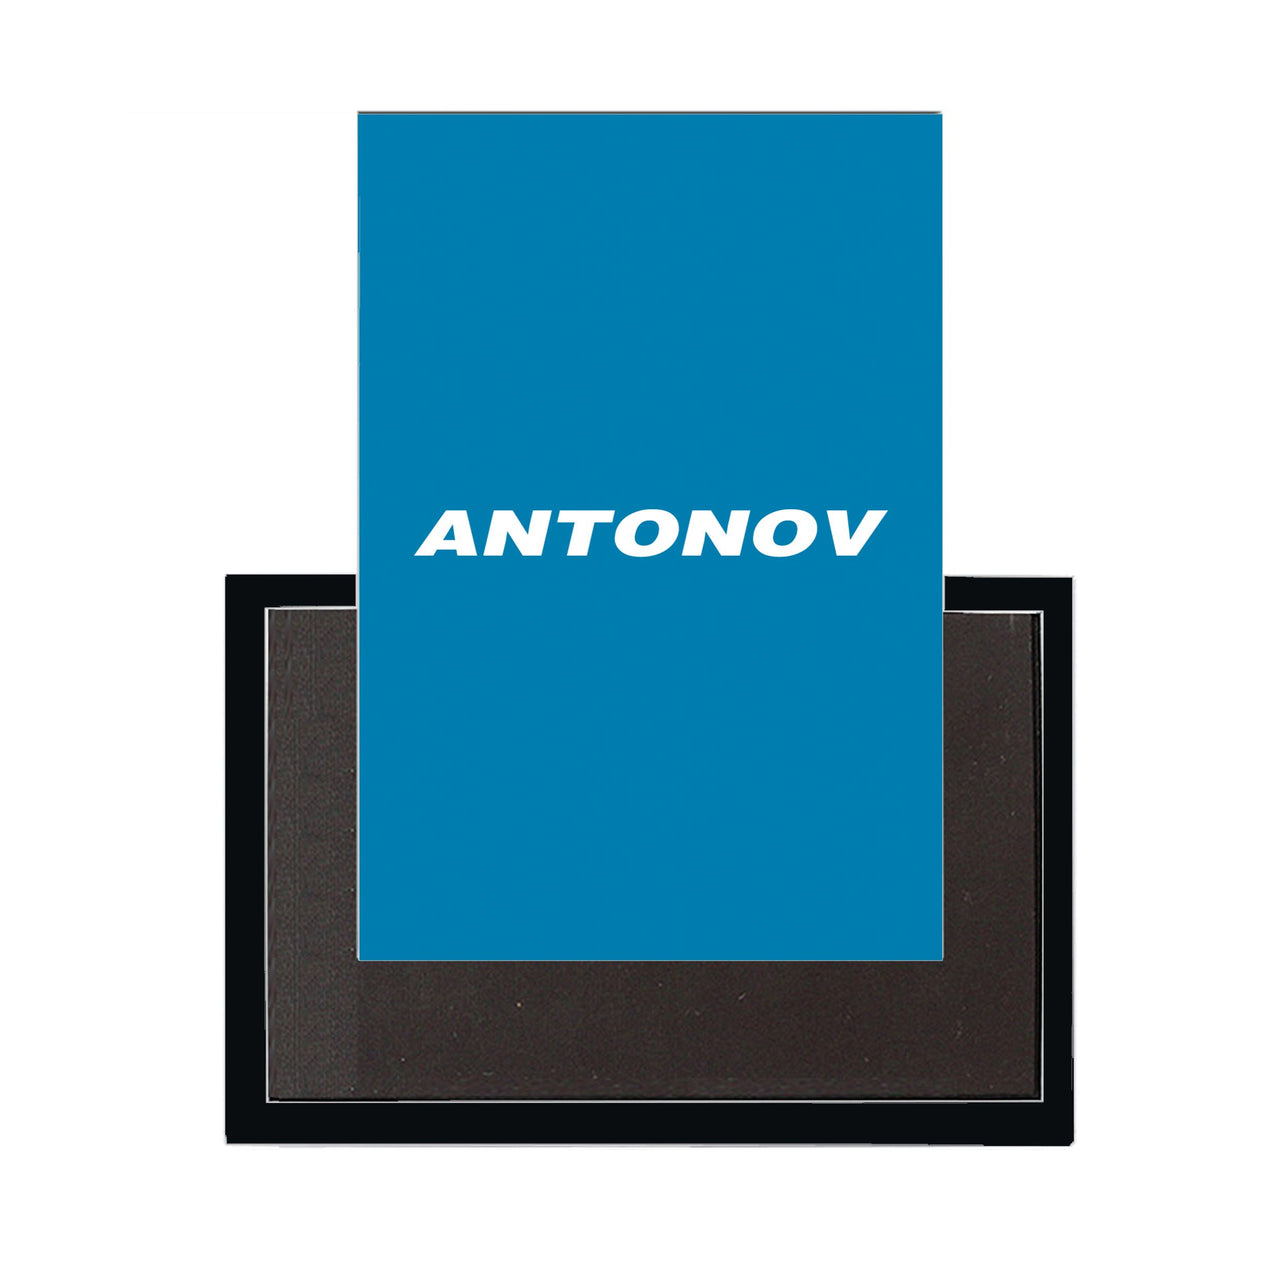 Antonov & Text Designed Magnets